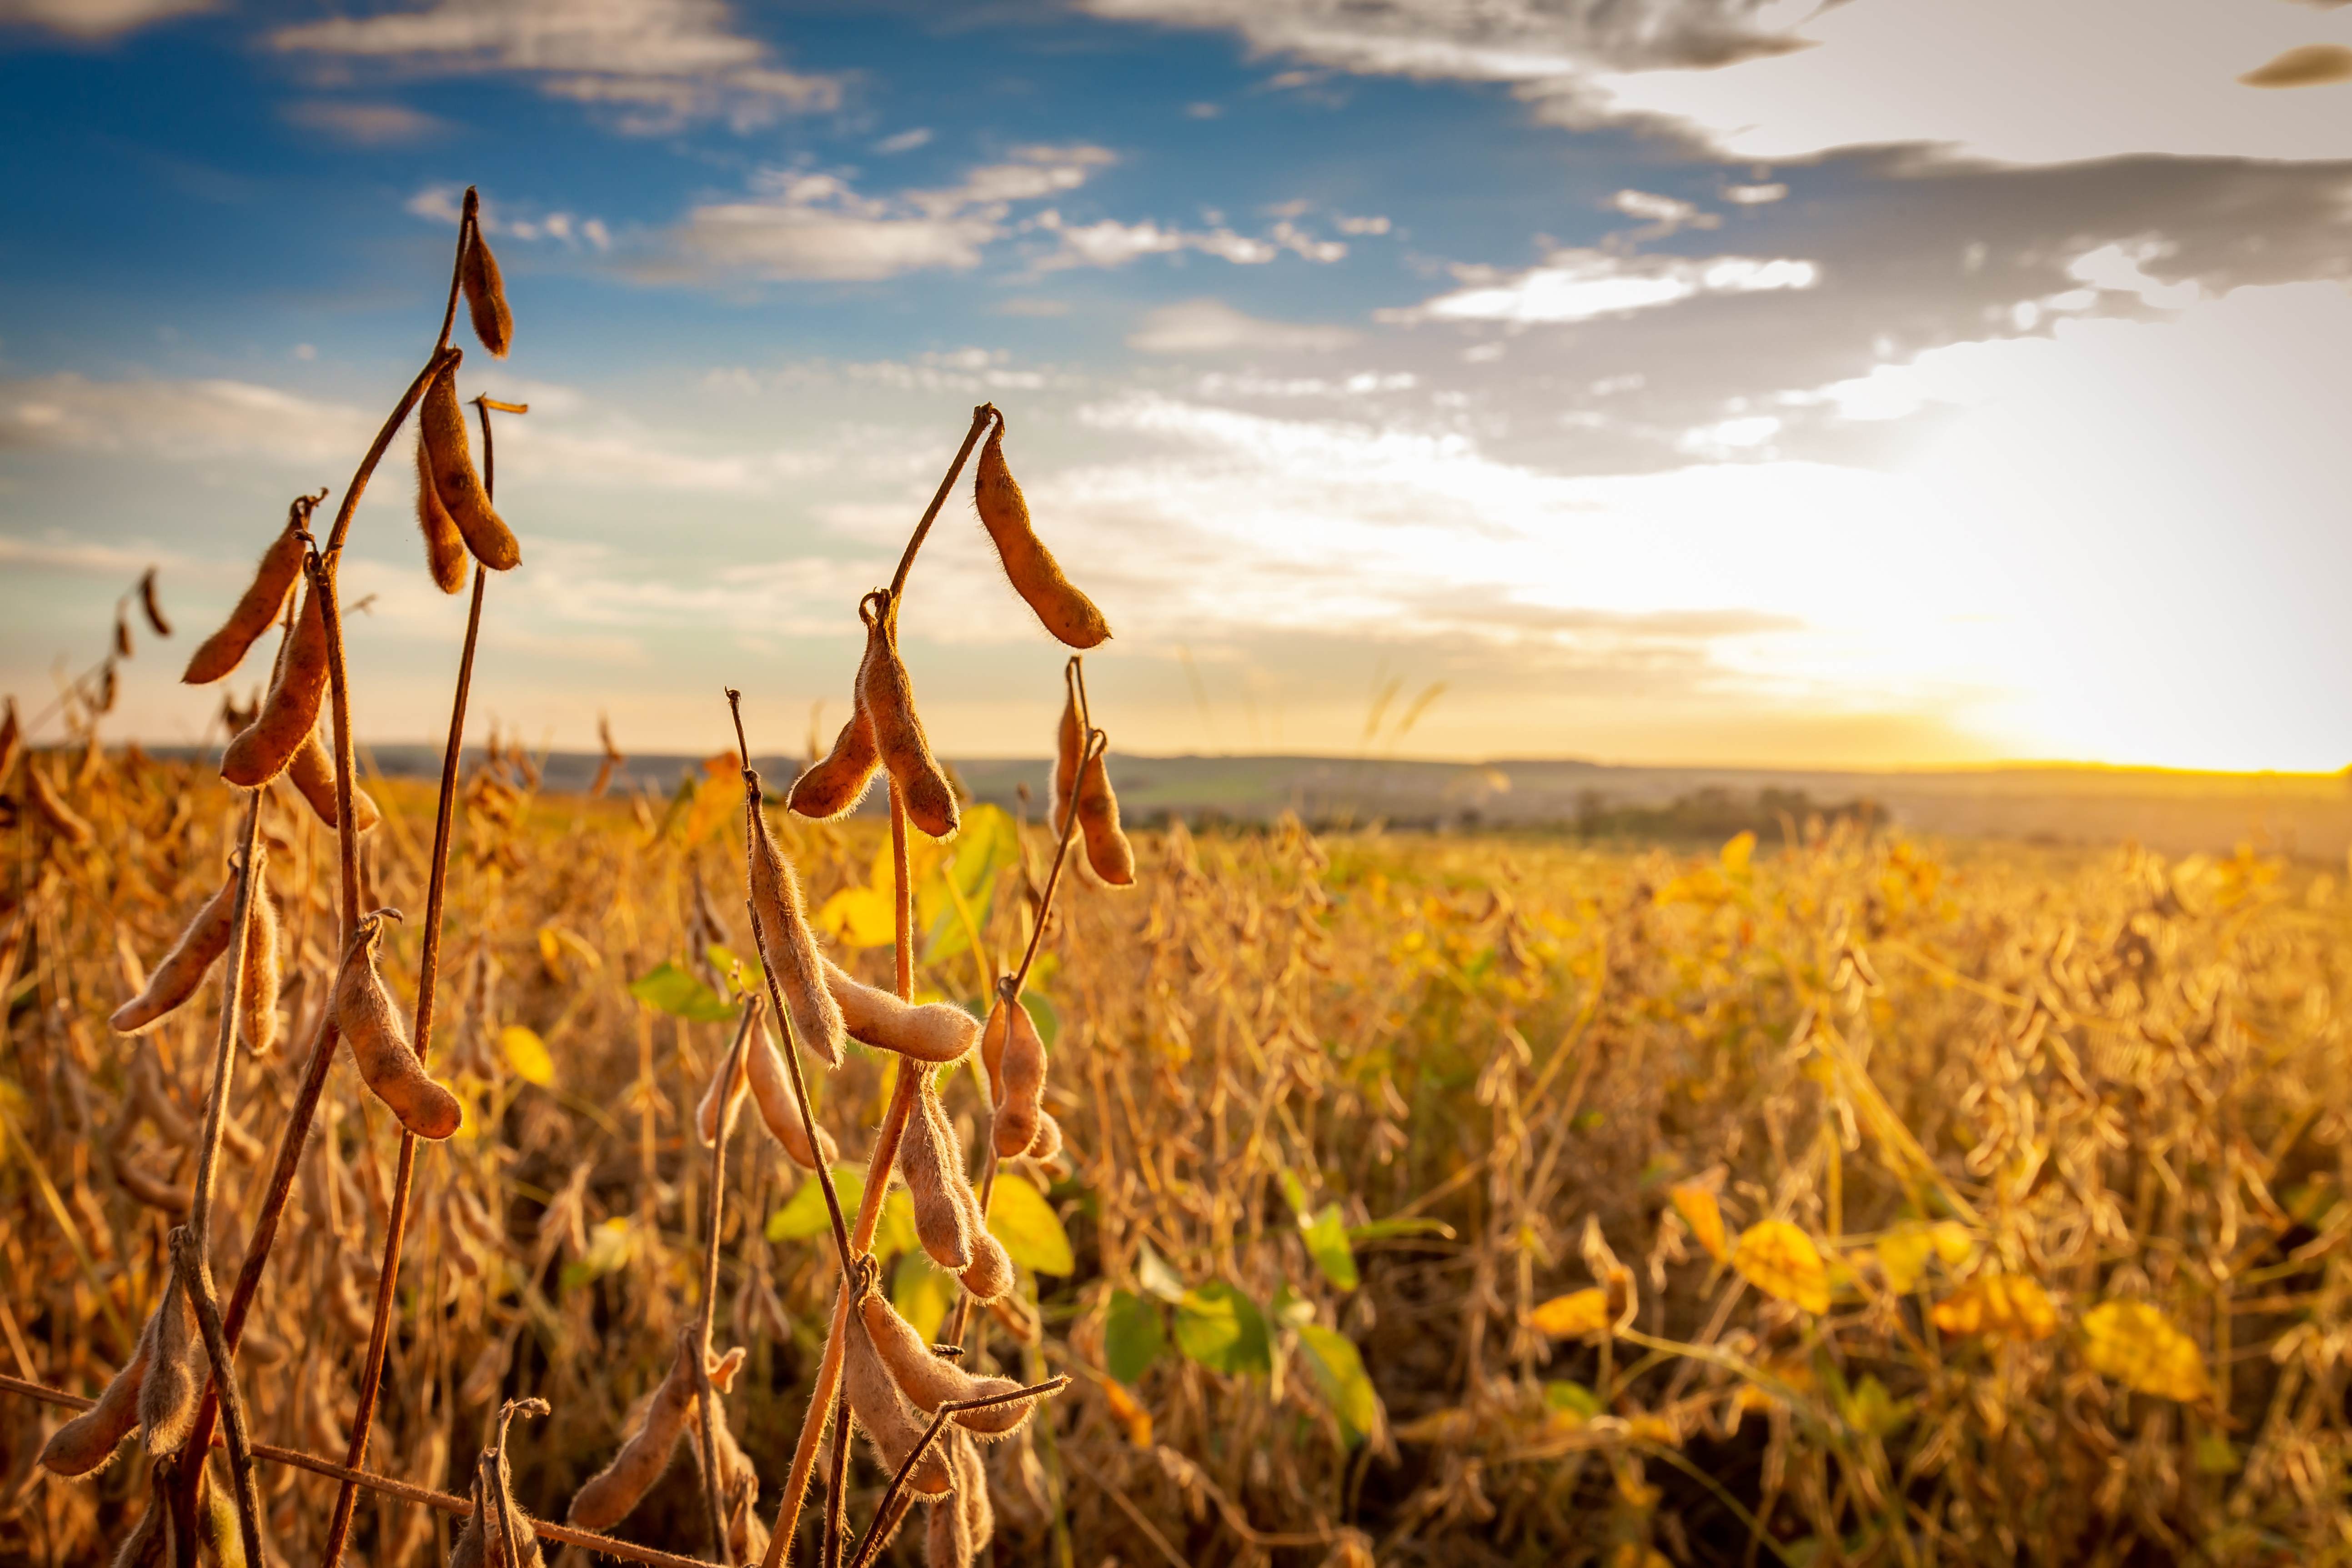 Mature soybean crop in field, sun setting